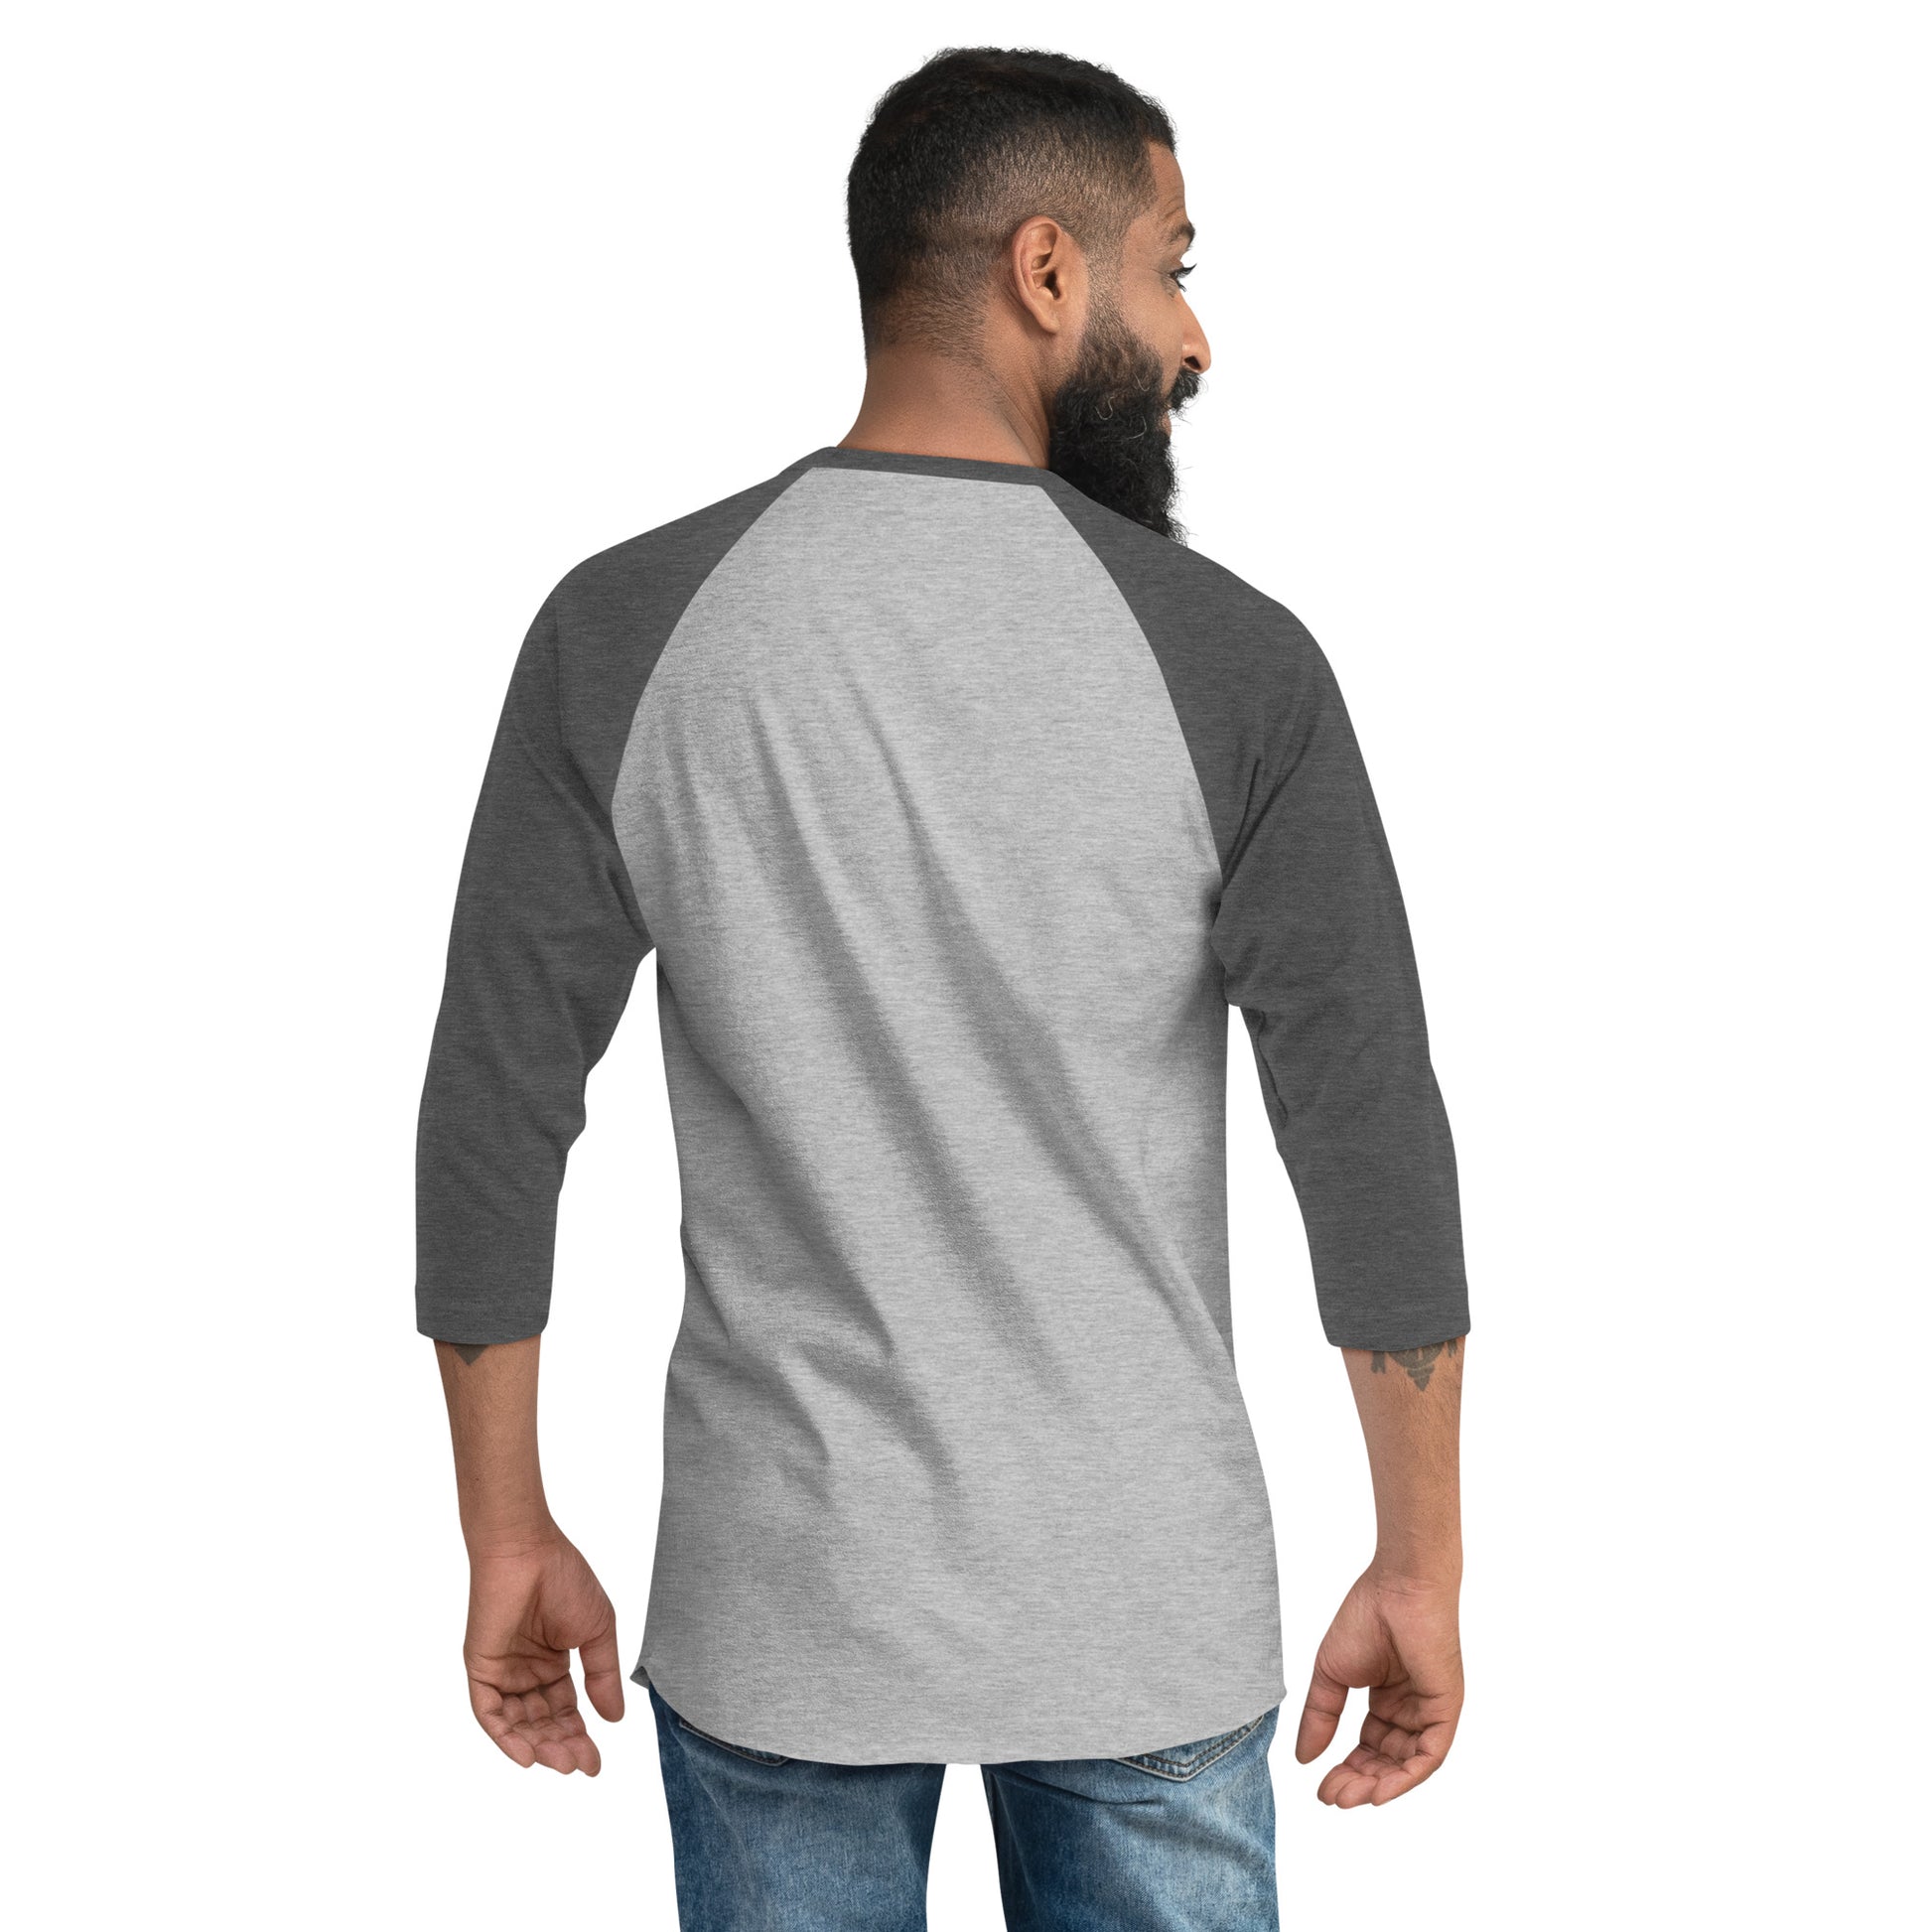 Unisex 3/4 Sleeve Raglan Shirt - Tultex 245